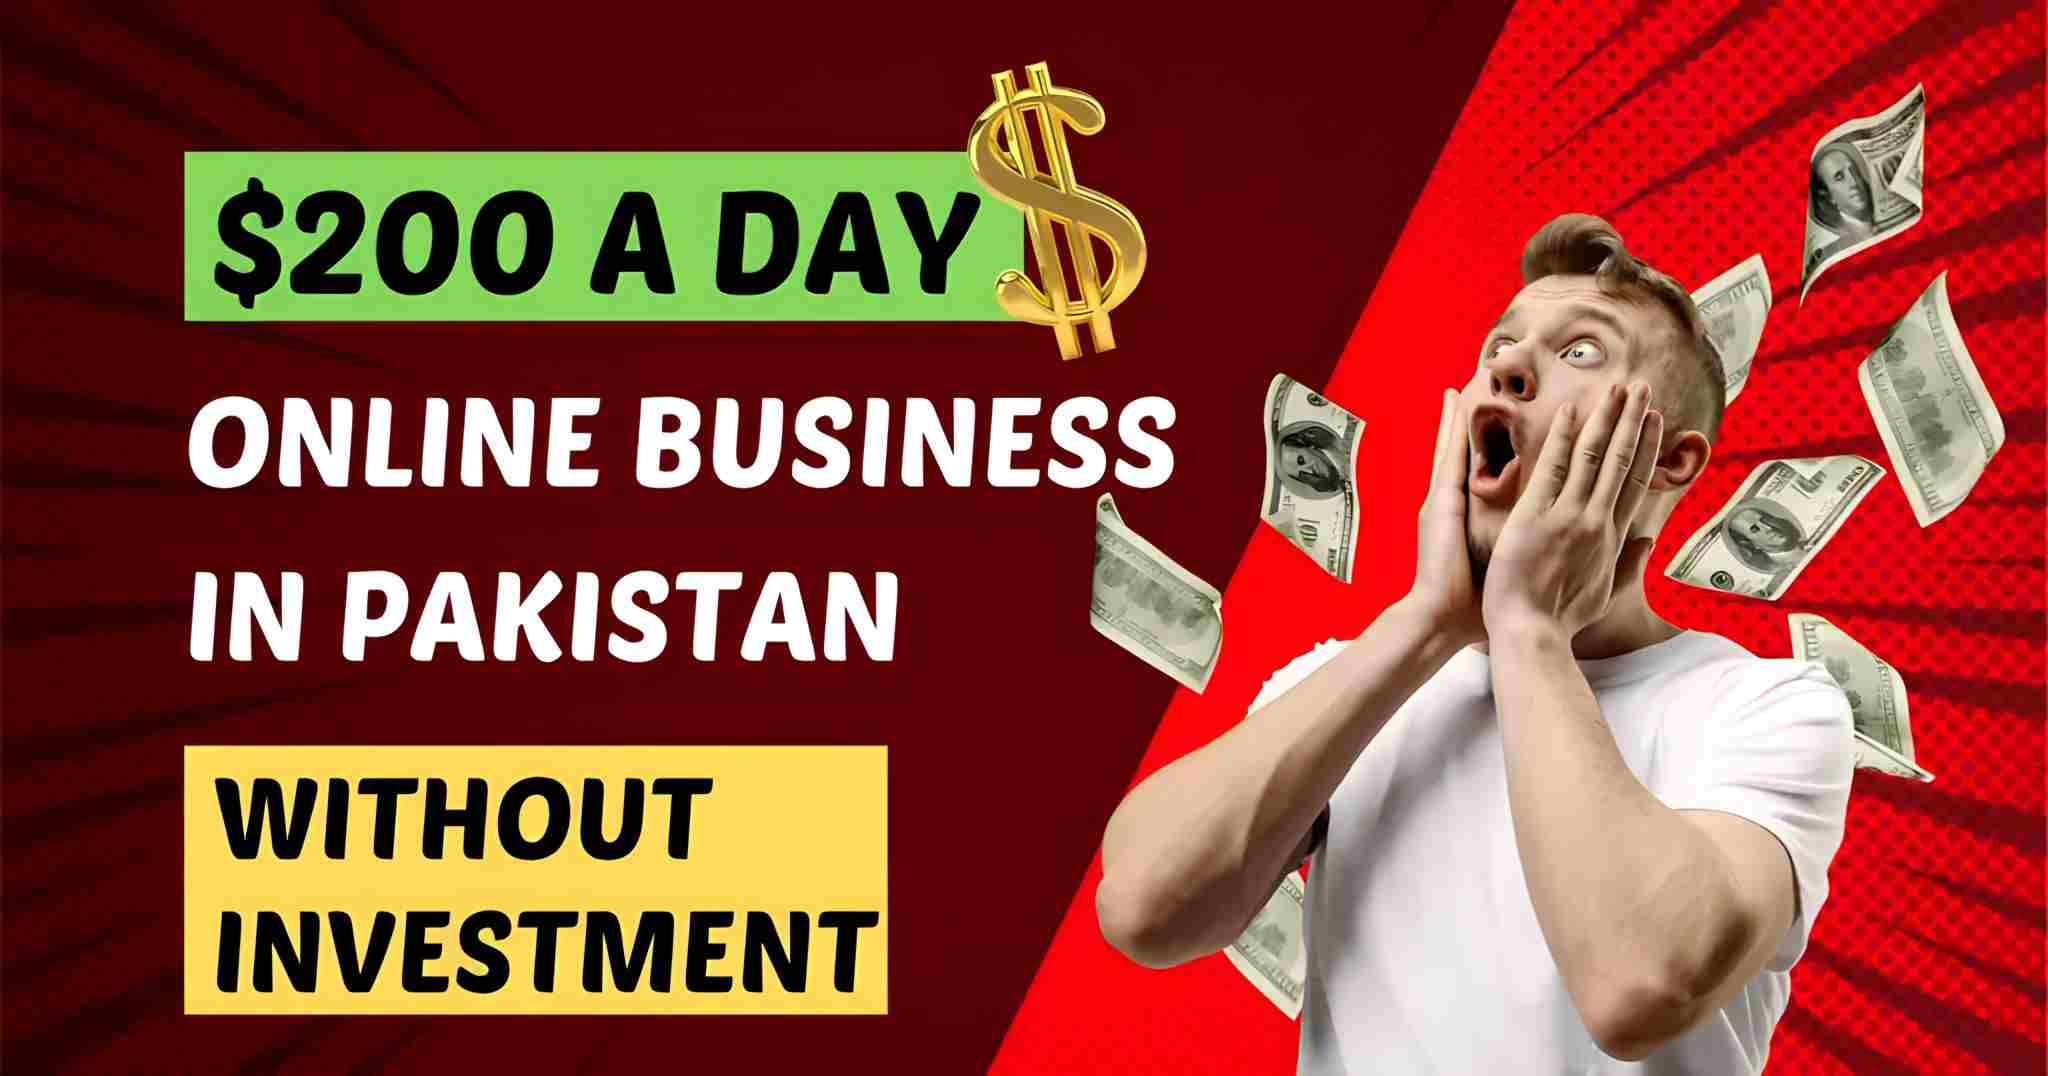 Top 16 Highest Earning Online Business Ideas in Pakistan